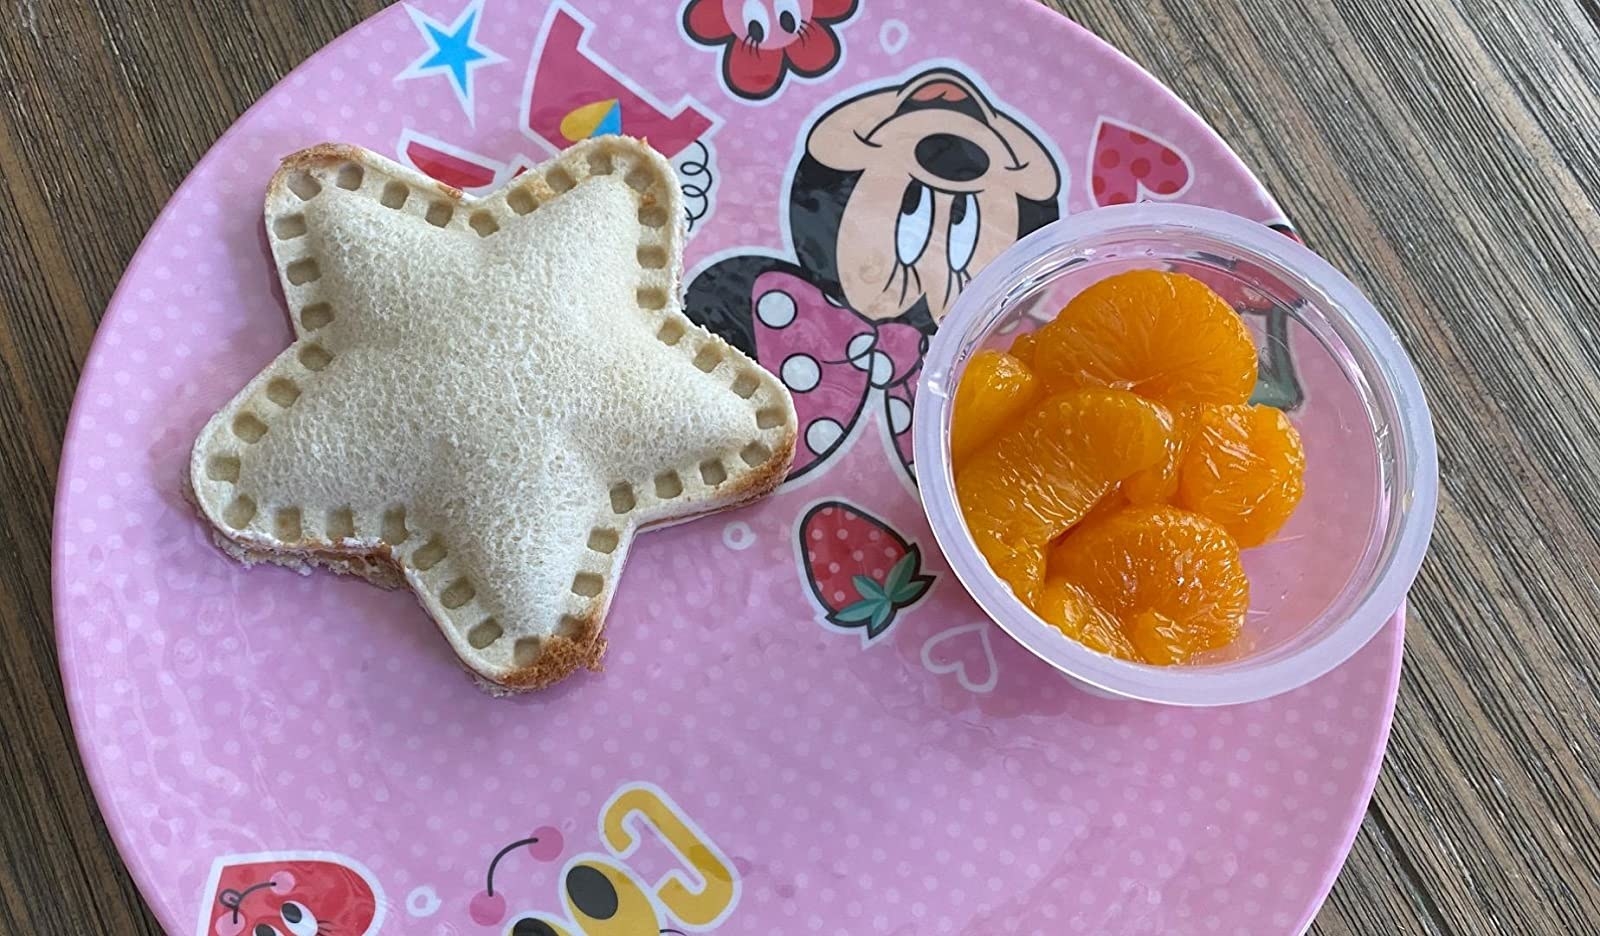 A sandwich cut in the shape of a star